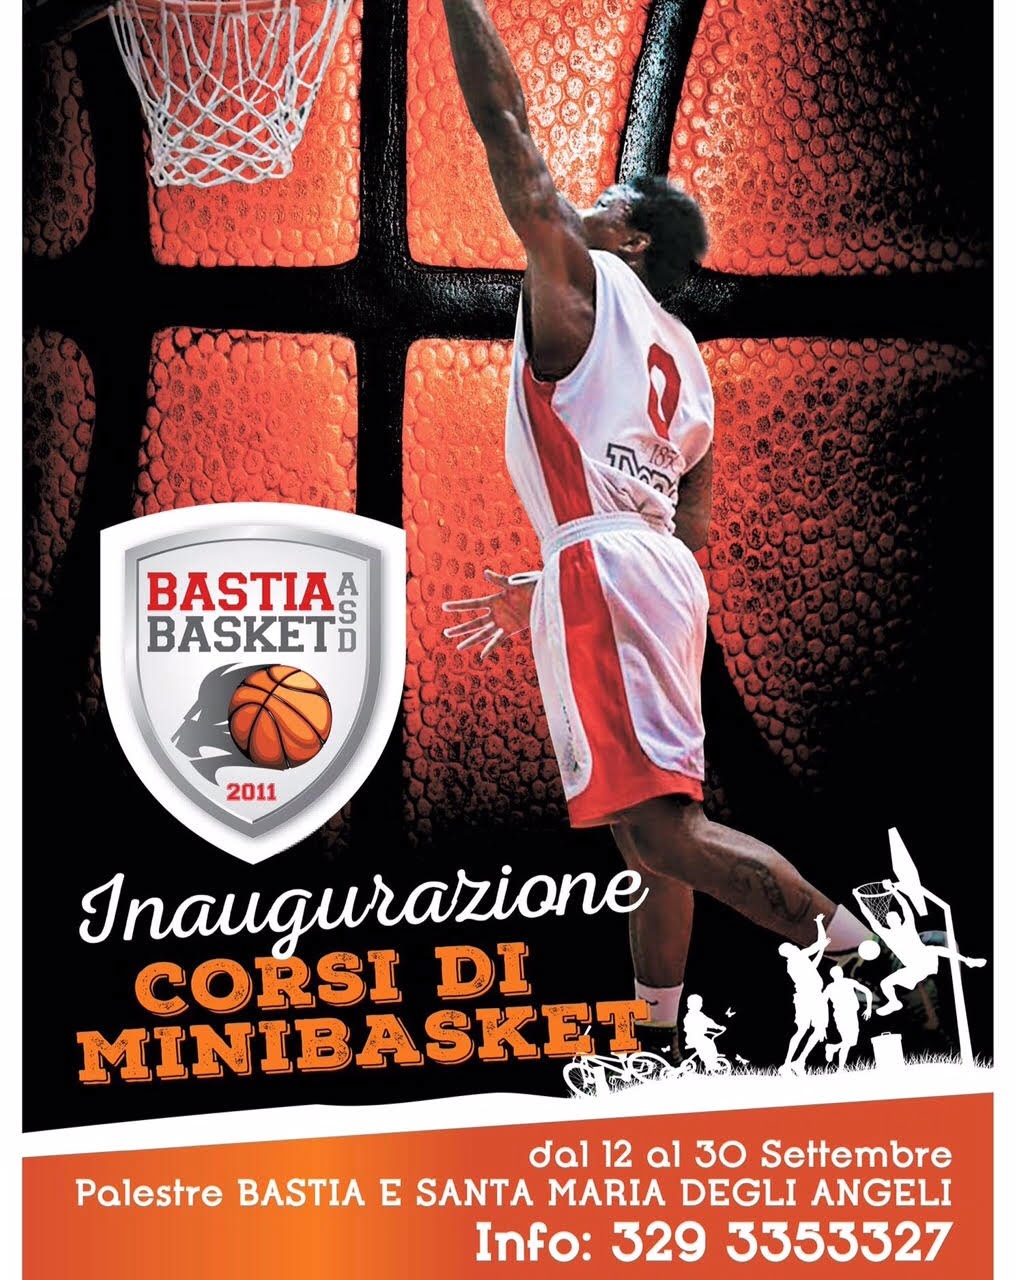 Basket Bastia, al via i corsi di minibasket dai 5 ai 12 anni